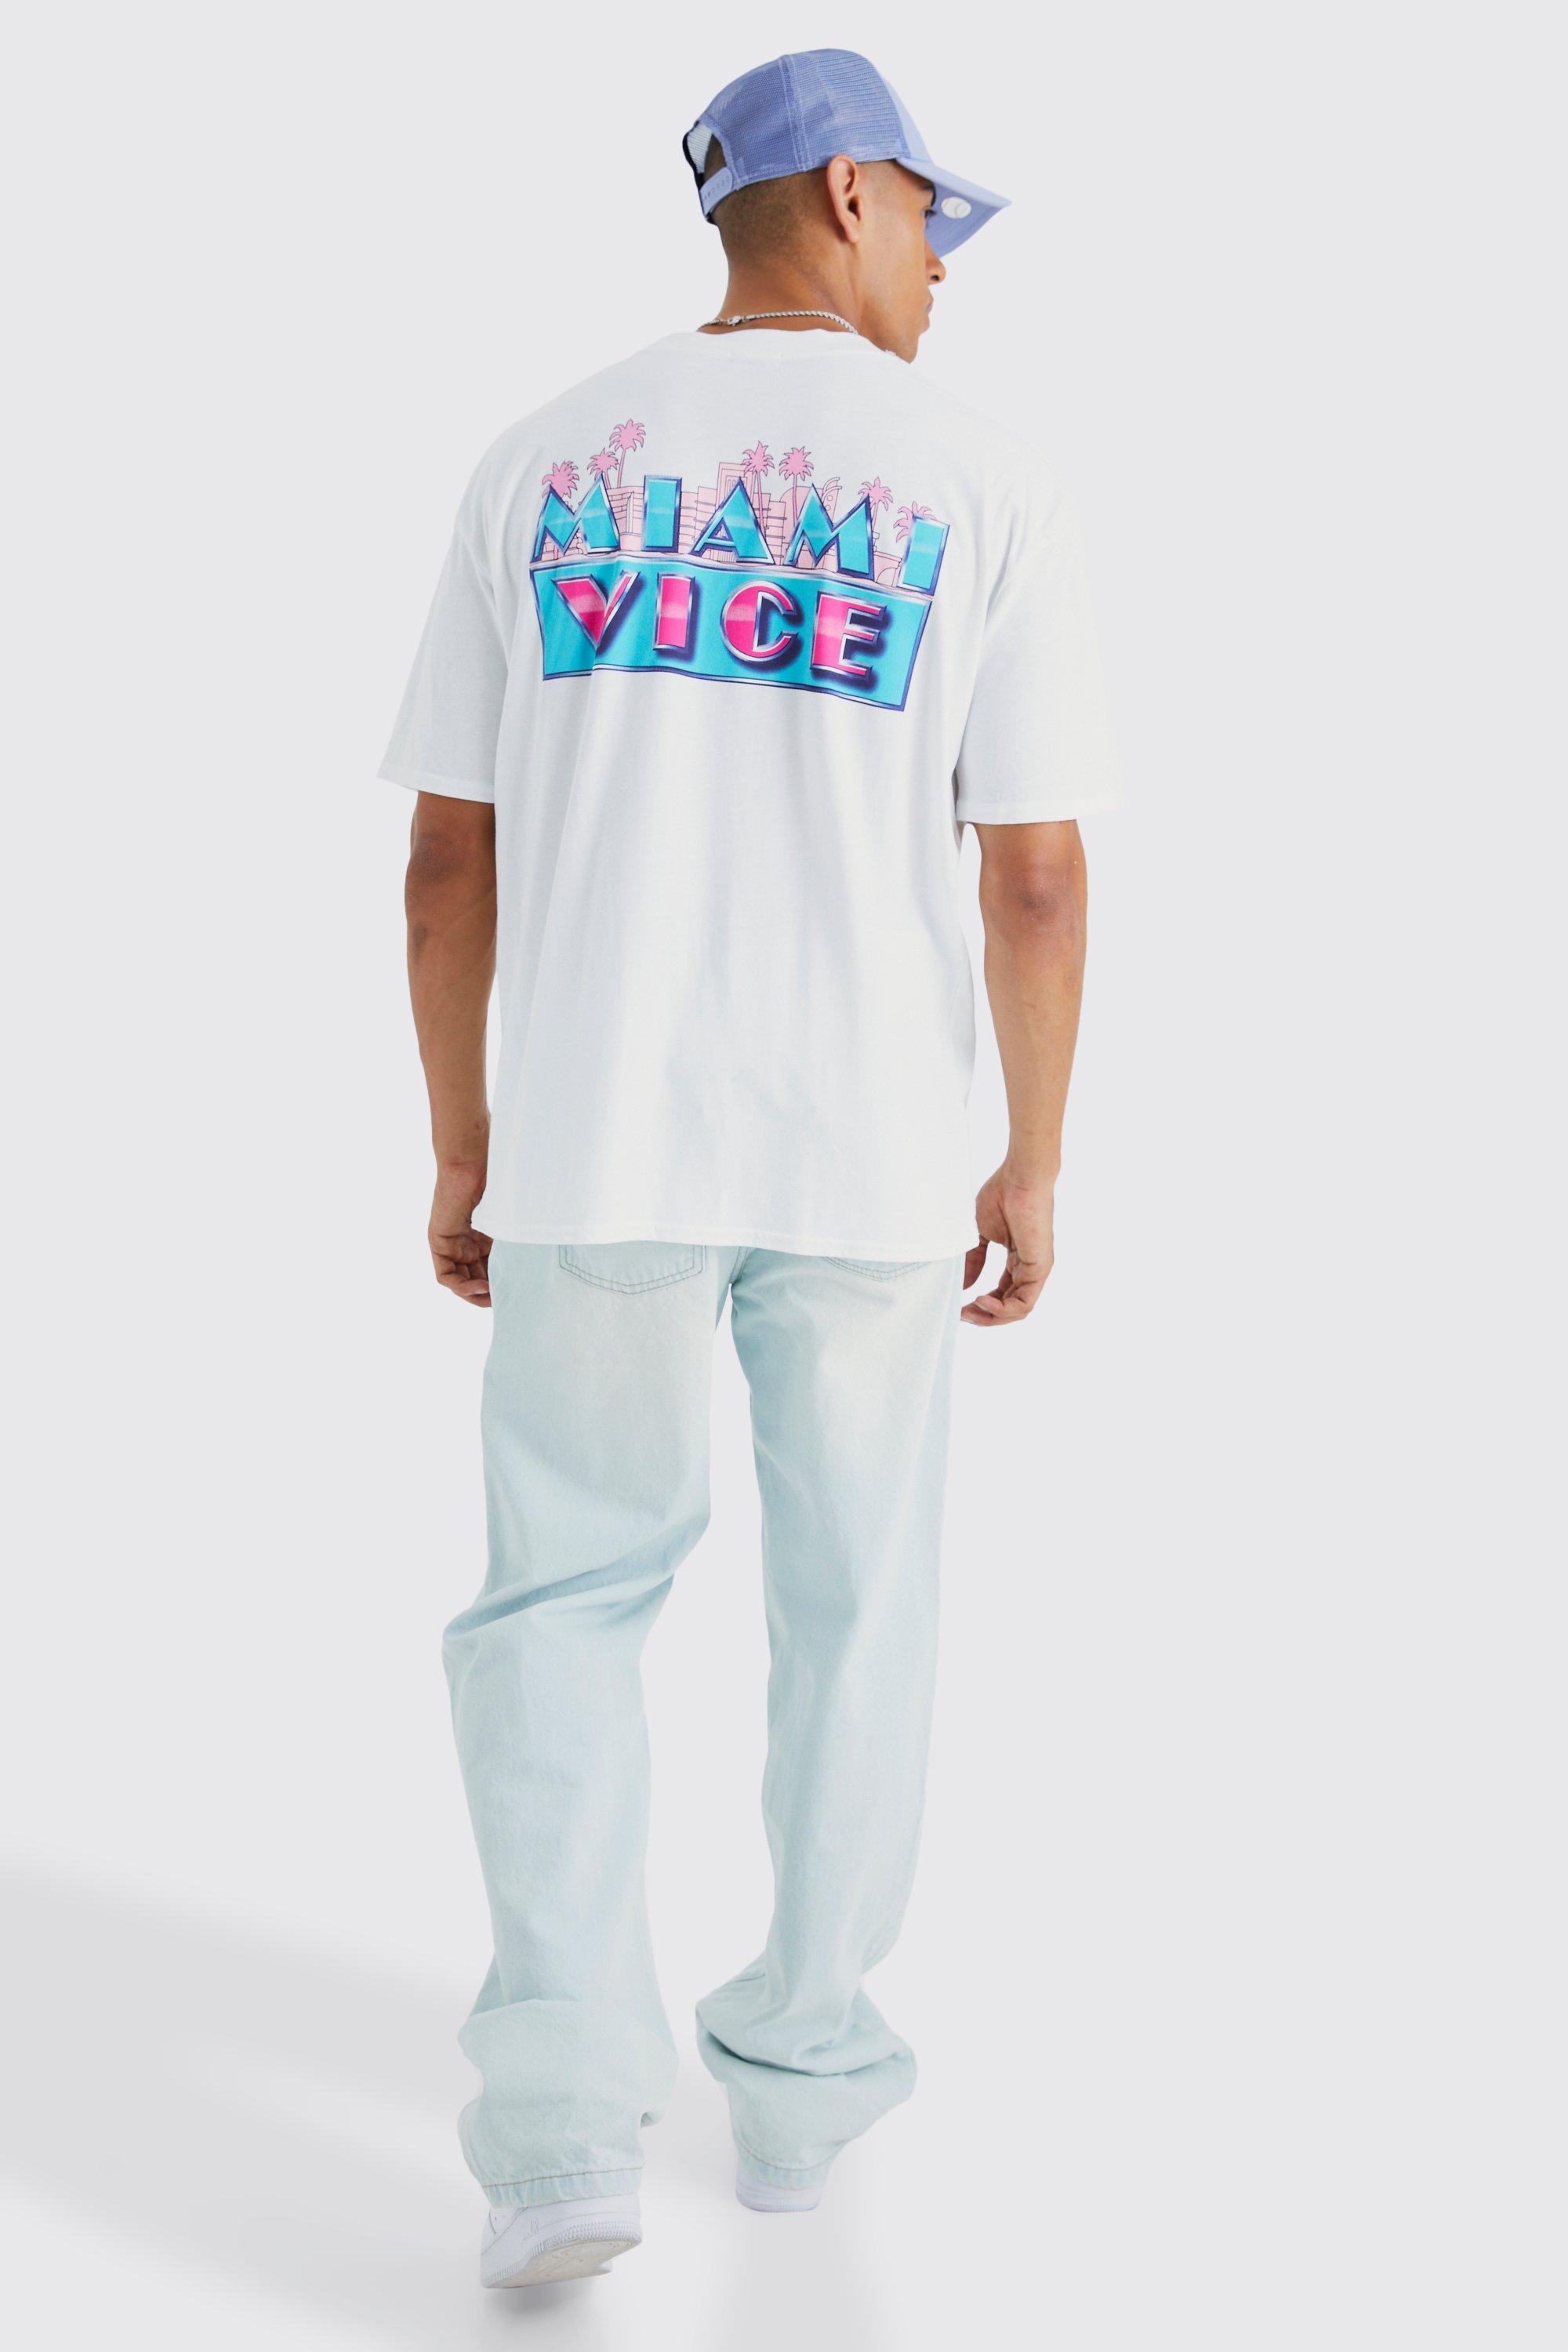 boohooMAN Oversized Miami Vice License T-Shirt - White - Size L